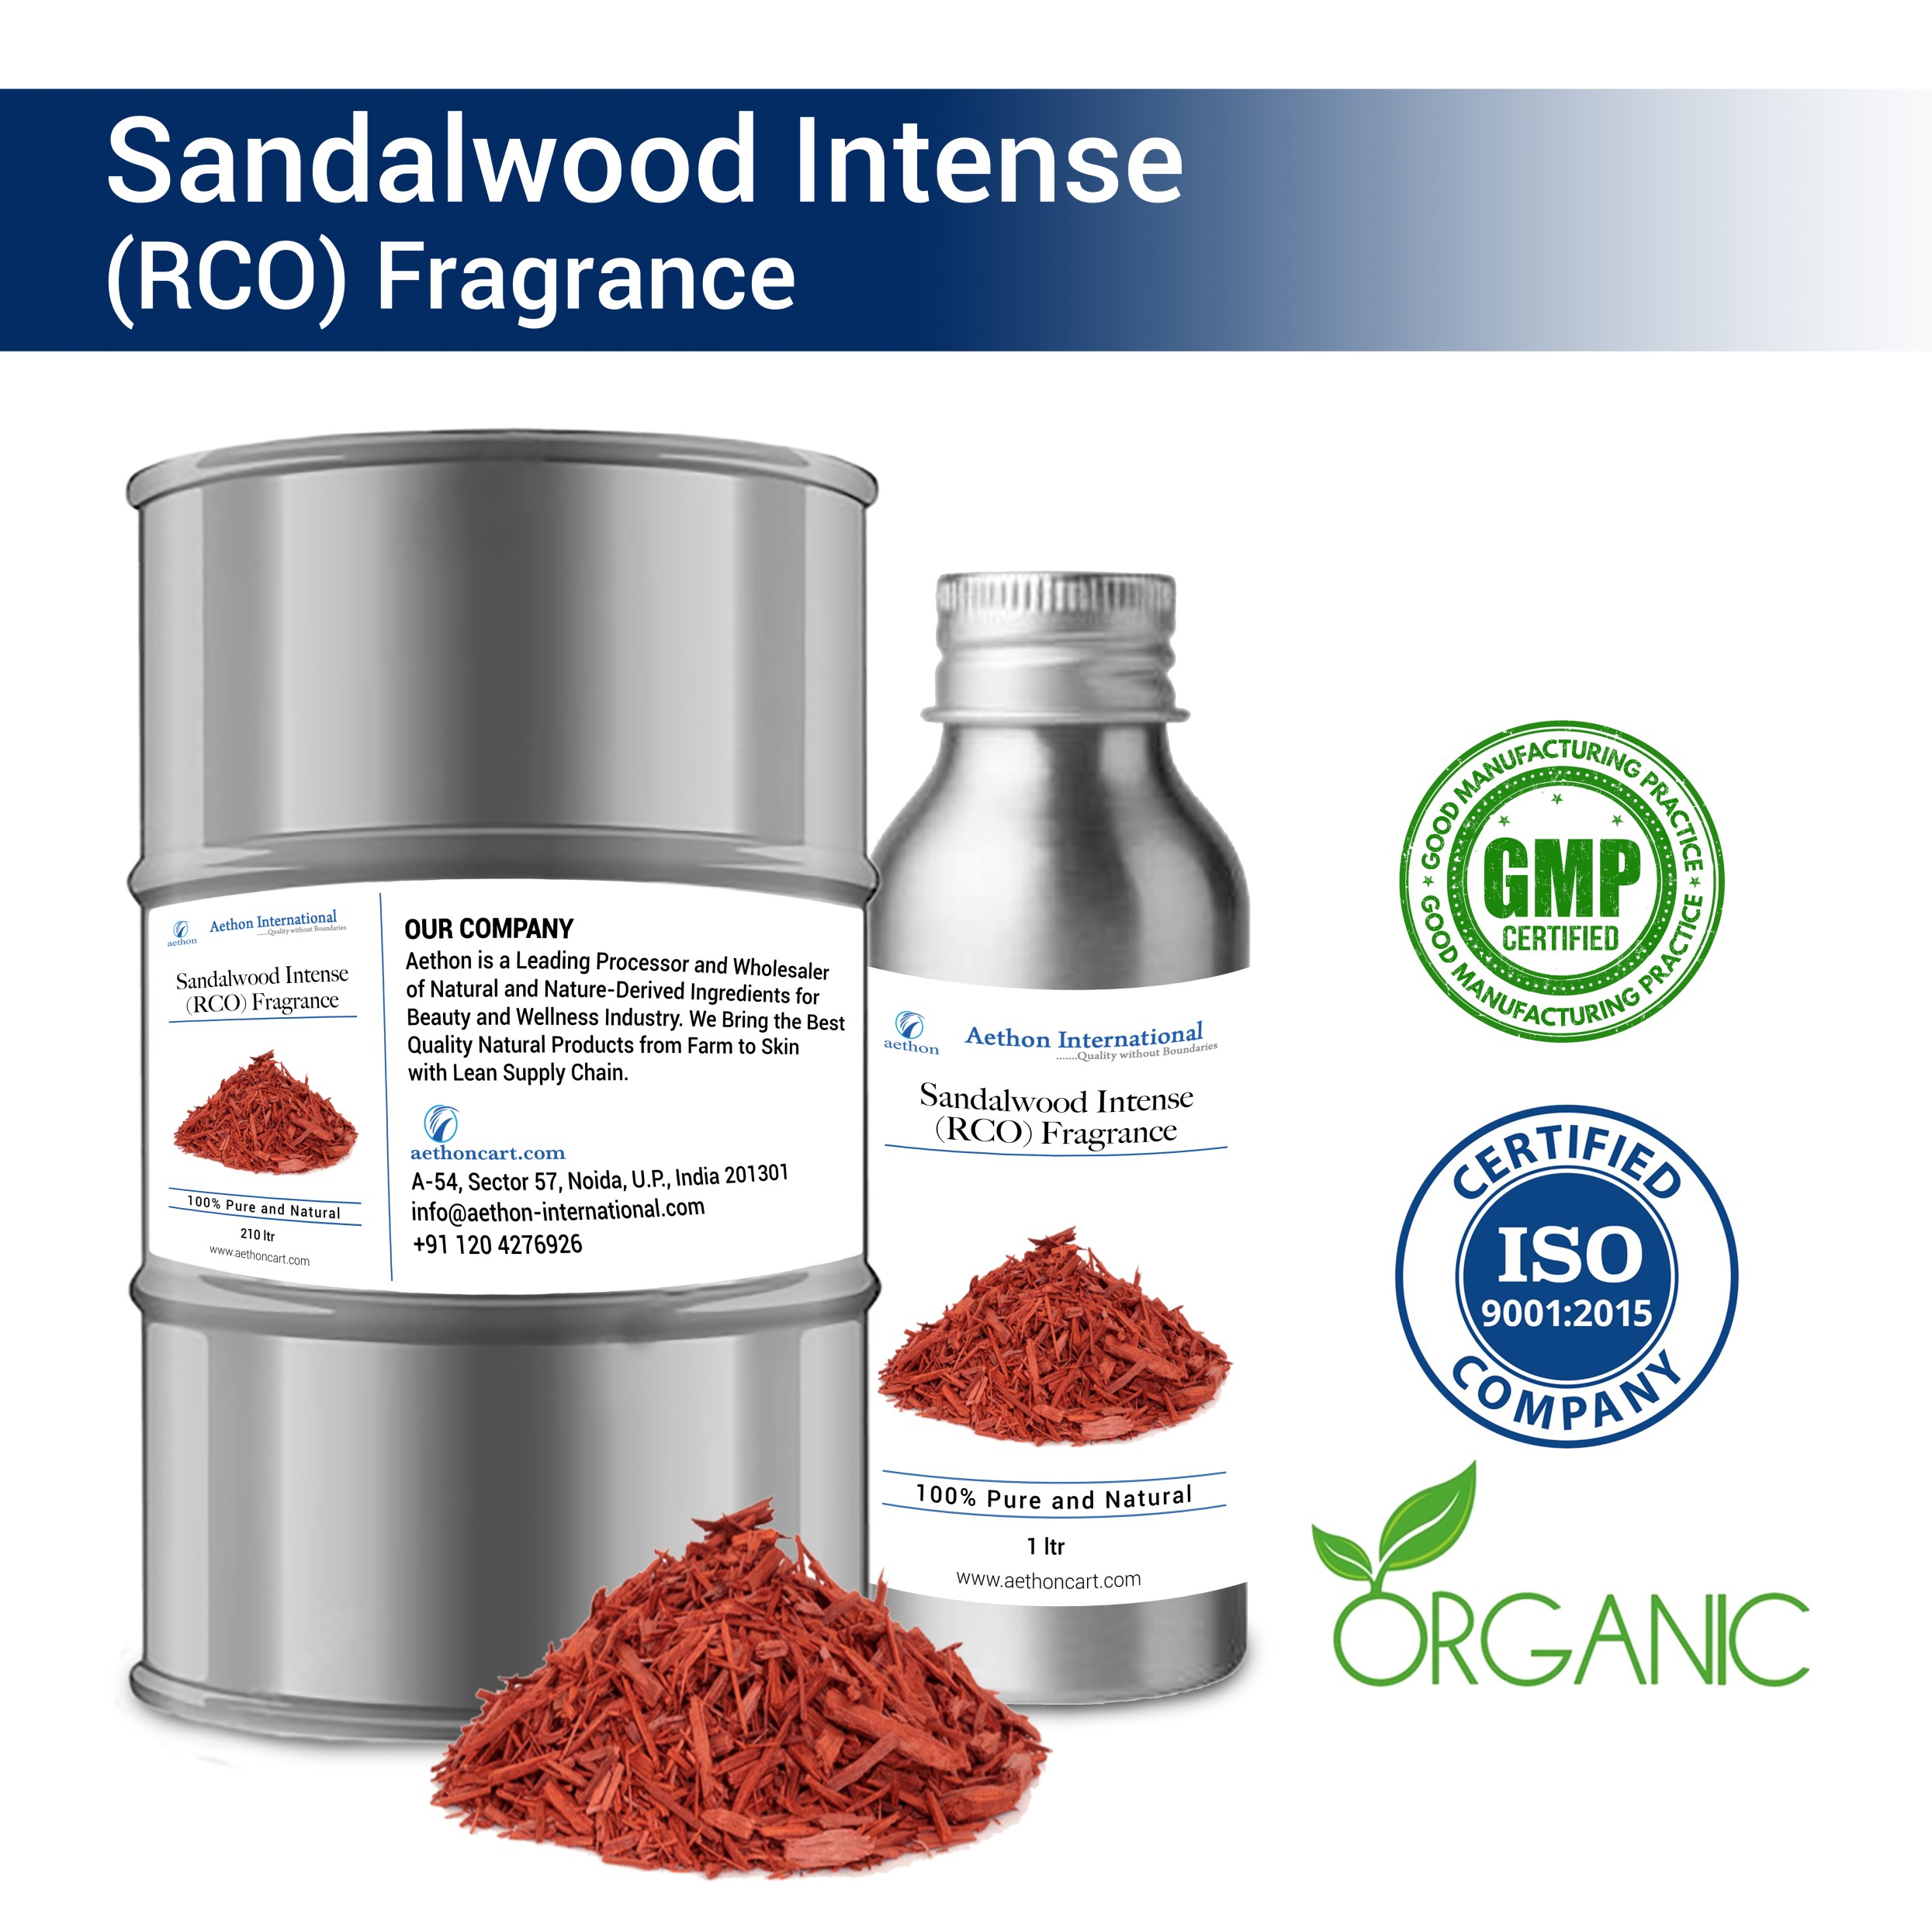 Sandalwood Intense (RCO) Fragrance